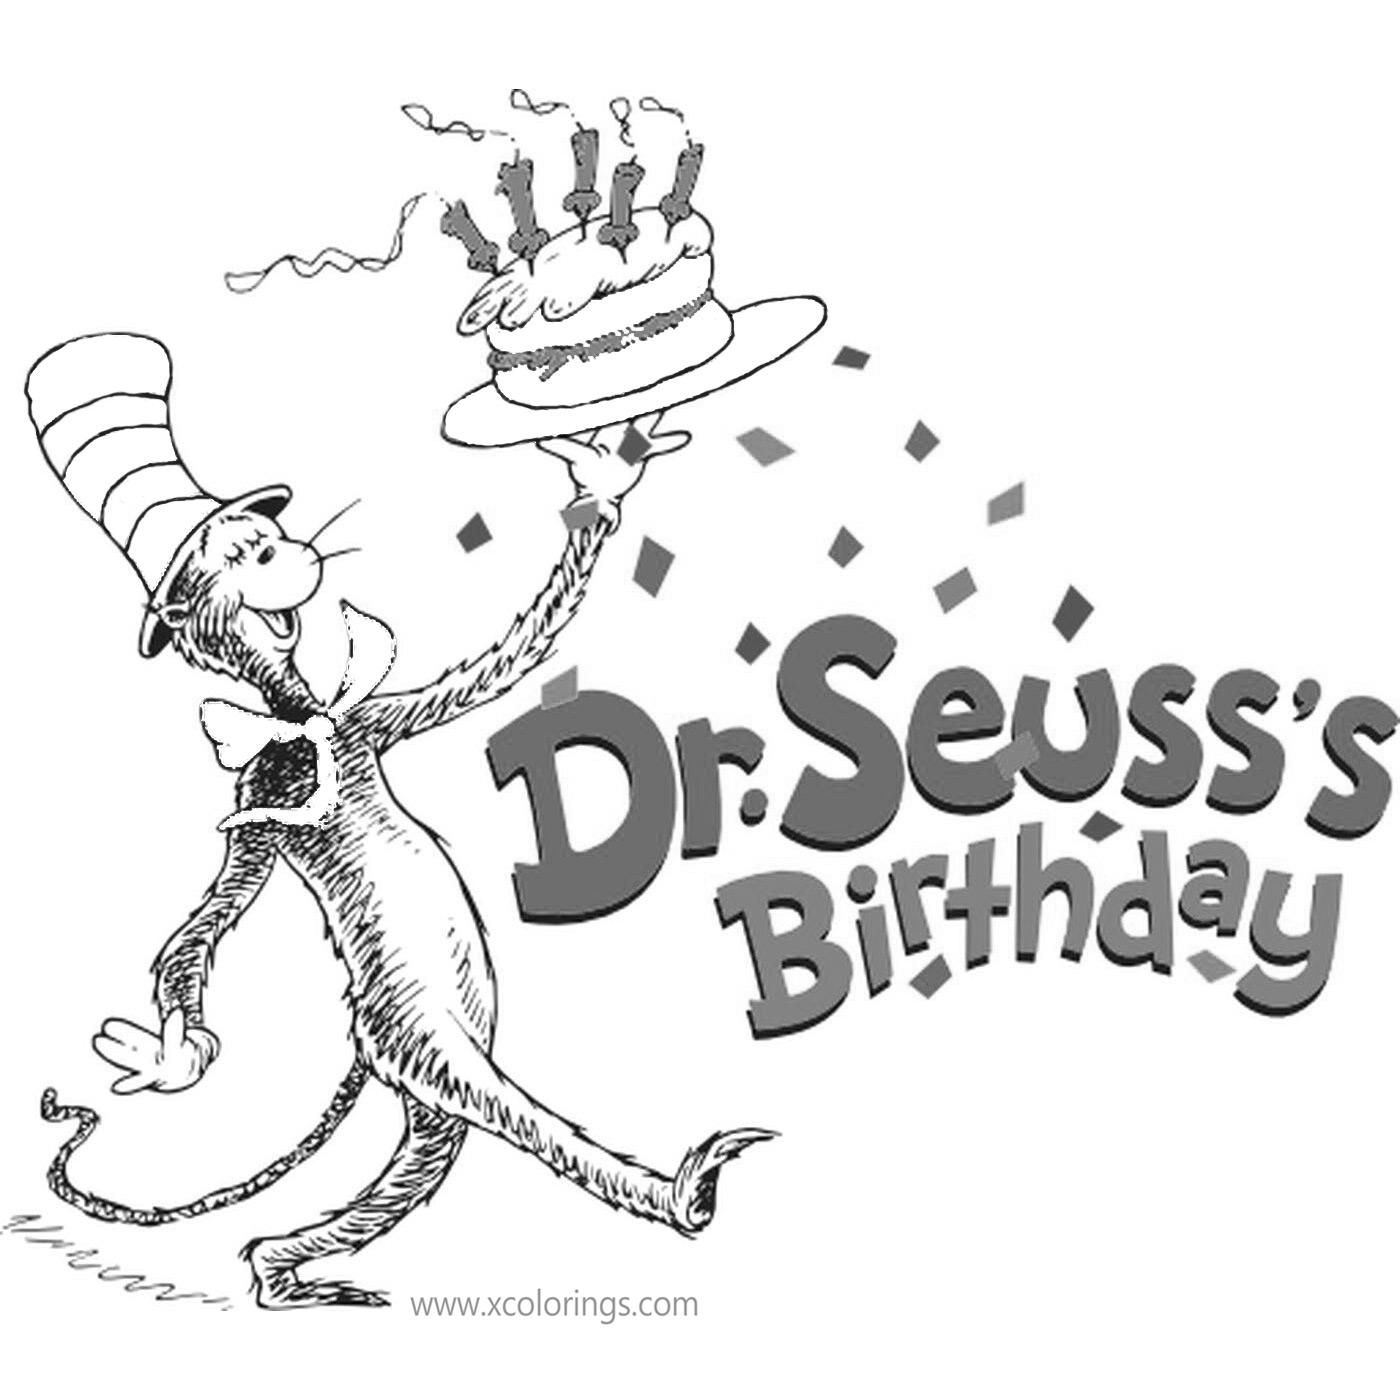 Happy Birthday Dr Seuss Printables